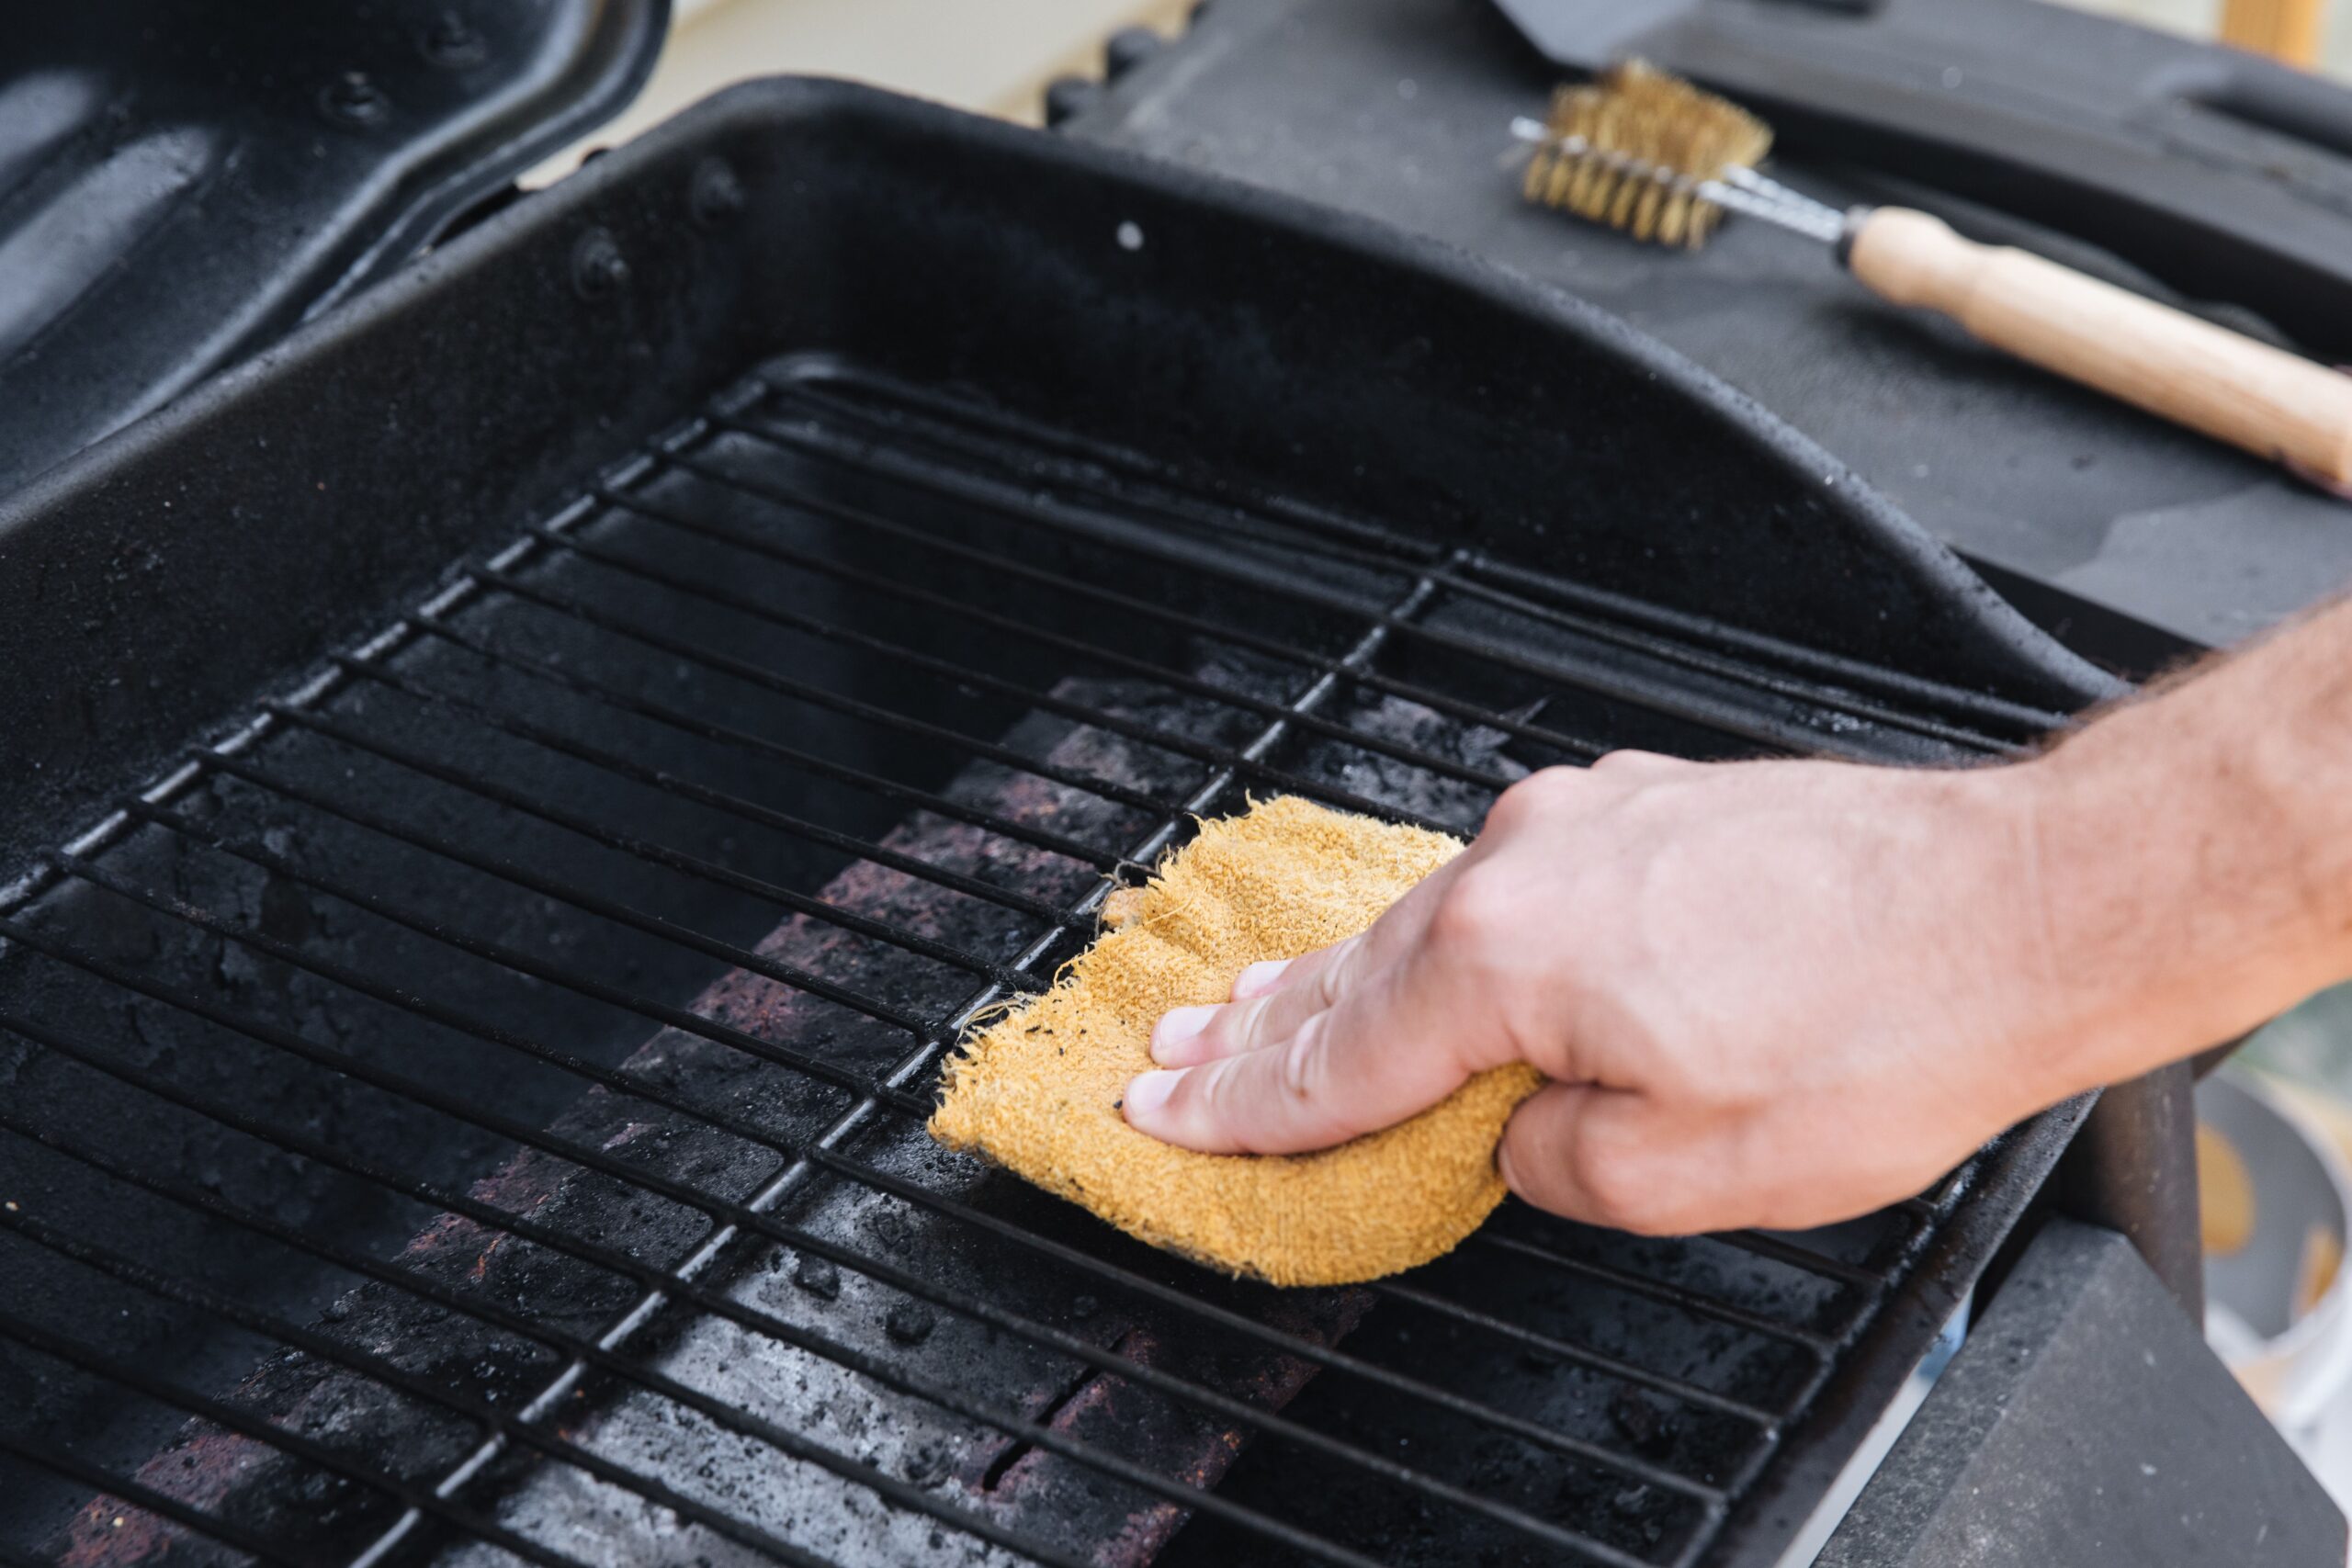 Safe food handling during proper cleaning of grills